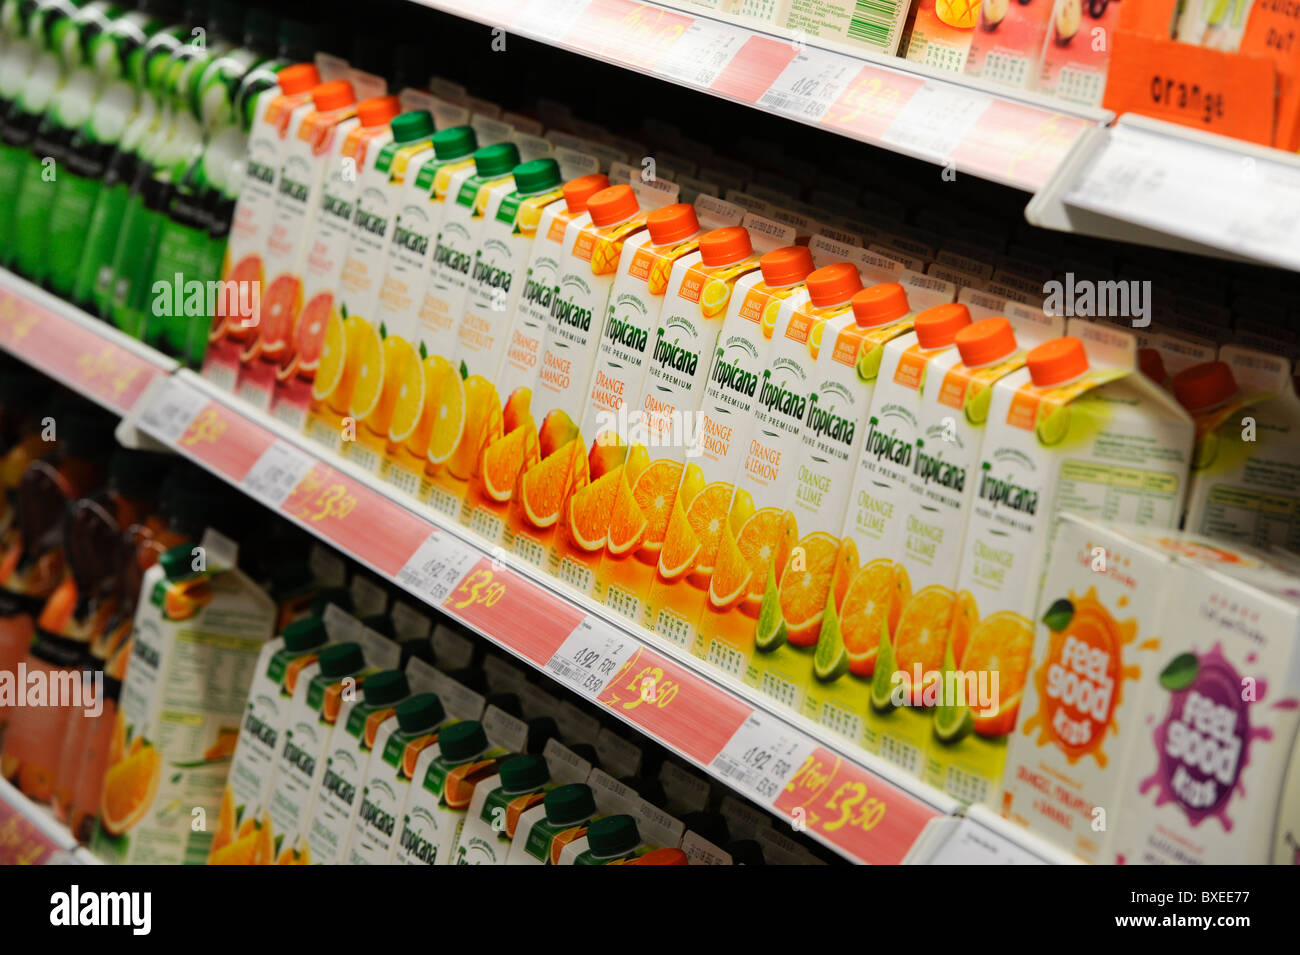 Tropicana drink cartons stacked on UK supermarket shelves. Stock Photo